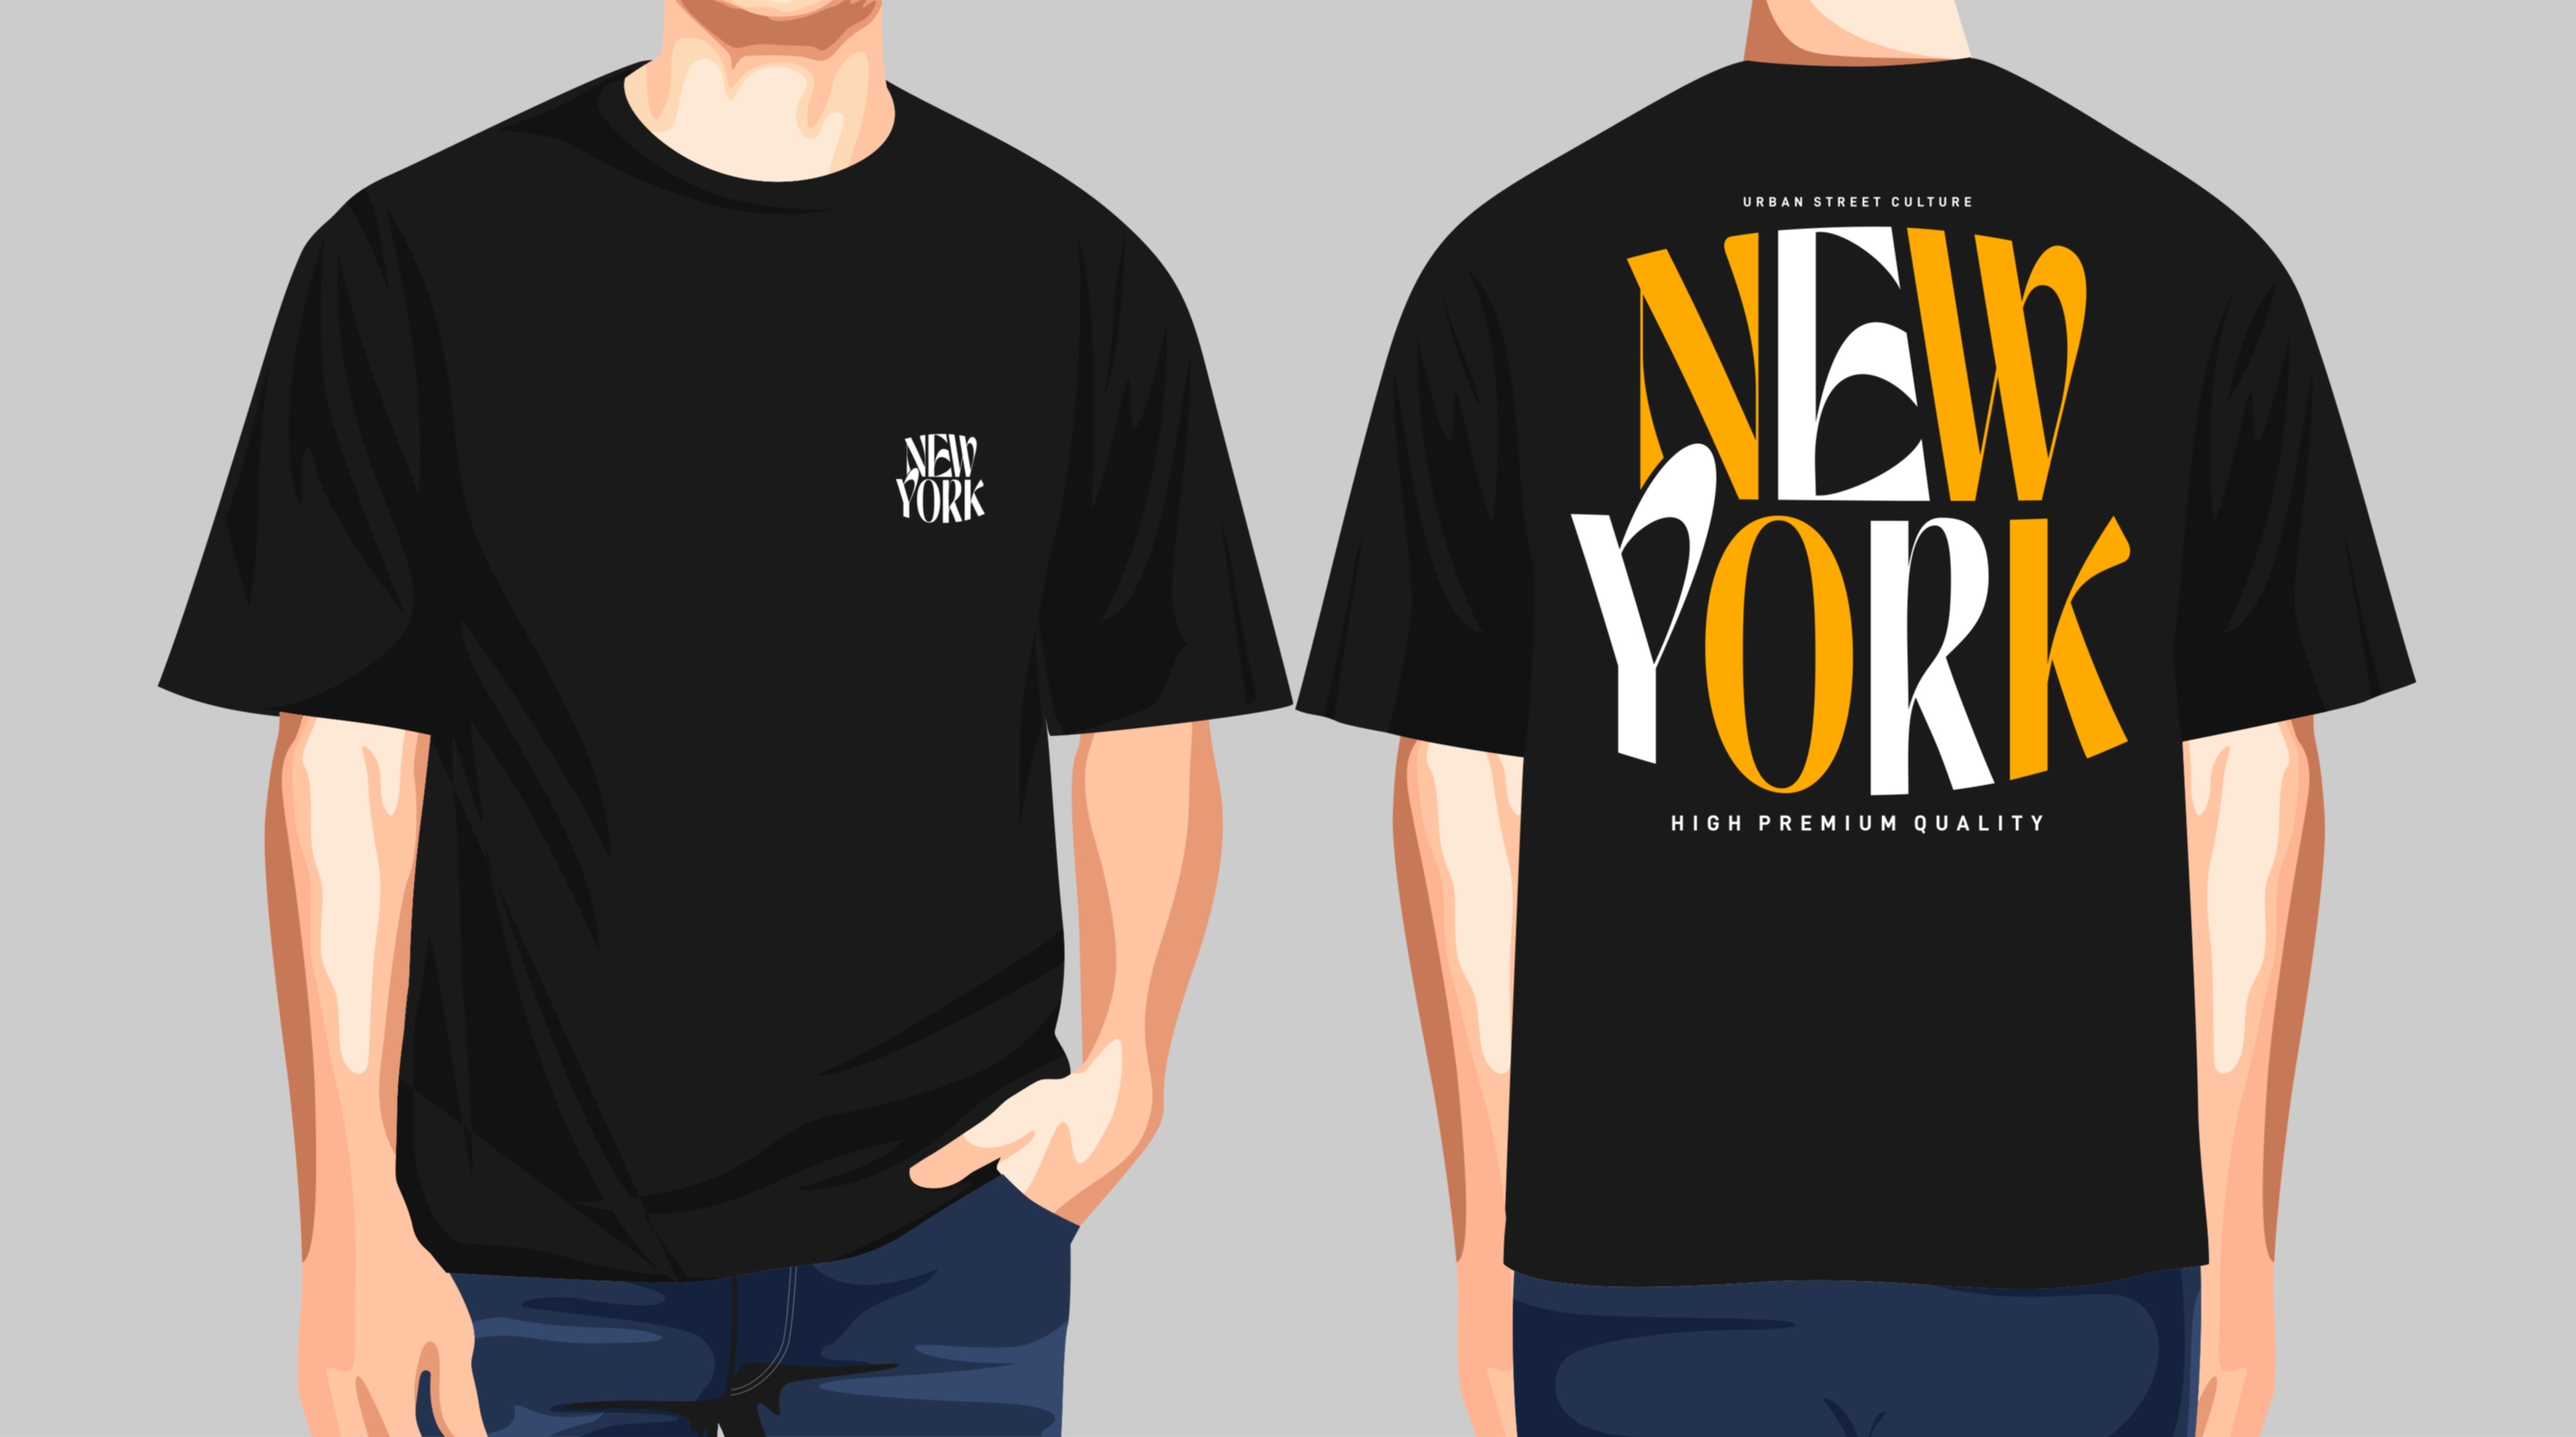 New York Urban Street Culture T-Shirt Design